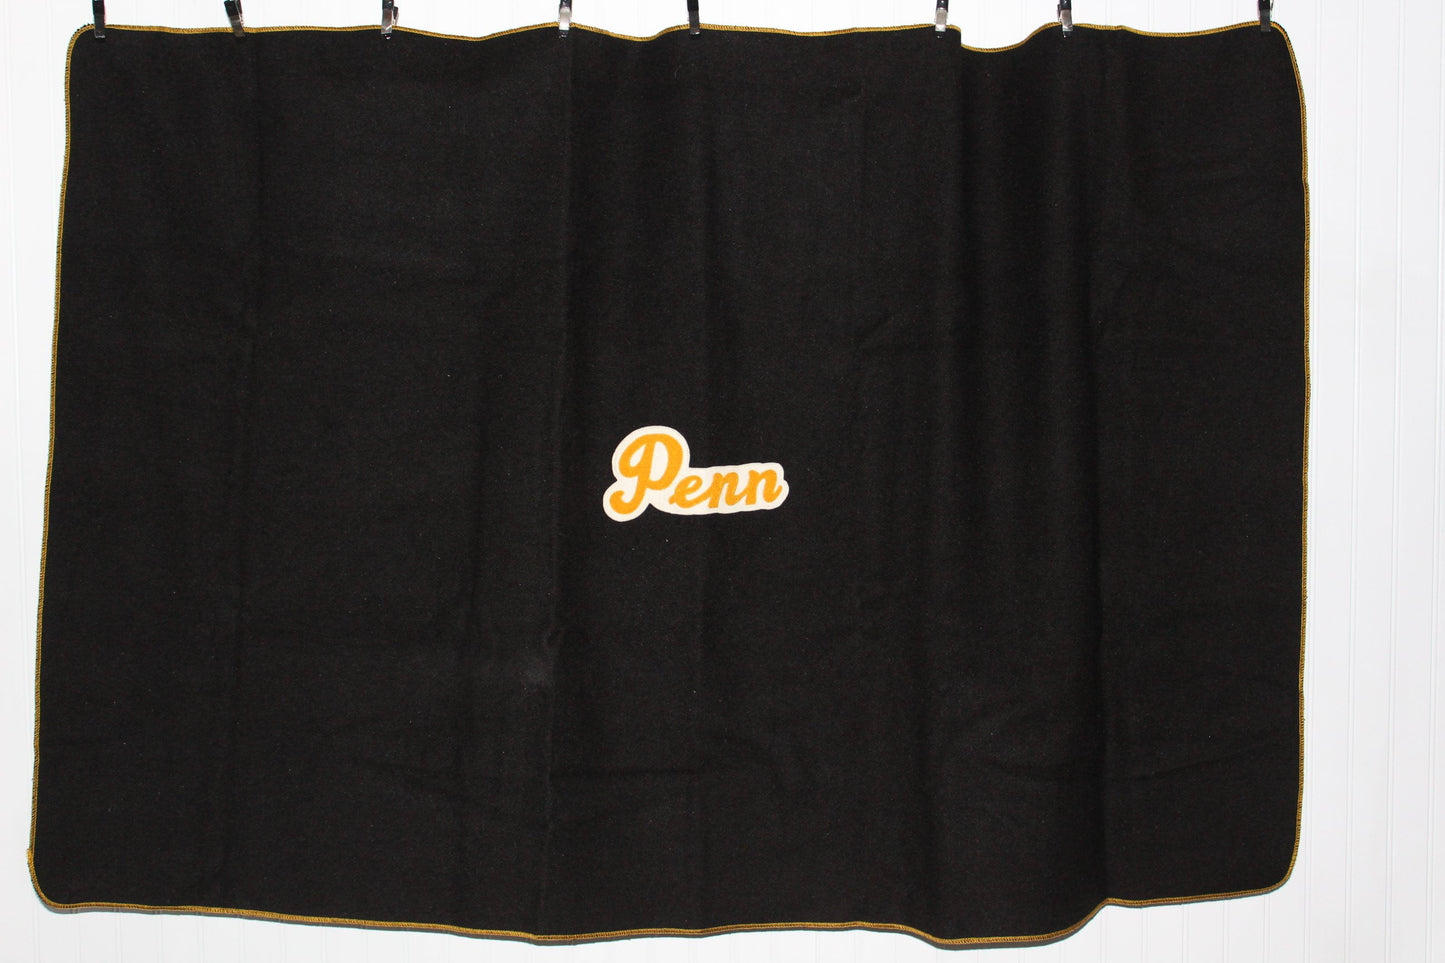 Unbranded Wool Stadium Blanket - "PENN" Penn High School Mishawaka Indiana - 40" X 63"